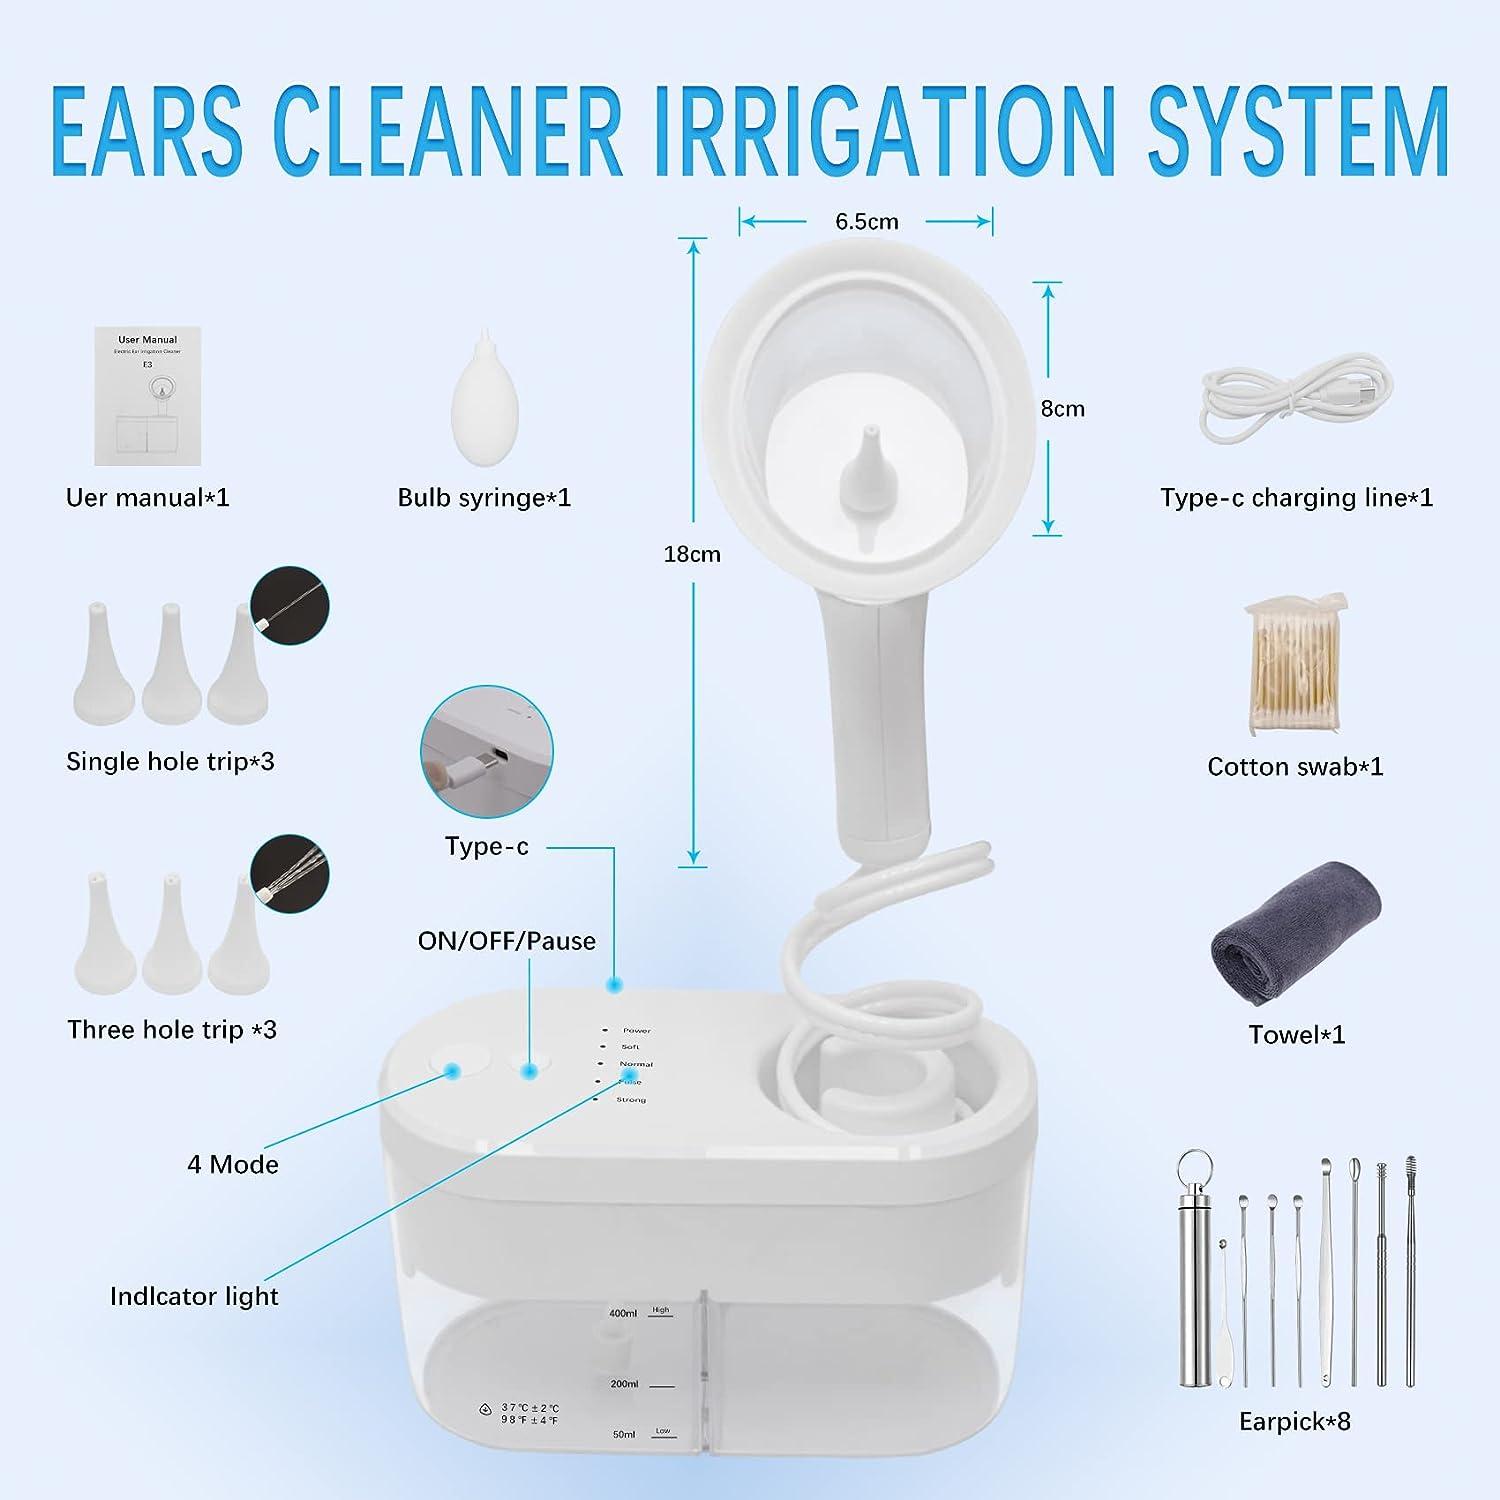 Tech-care Ear Wax Removal Kit